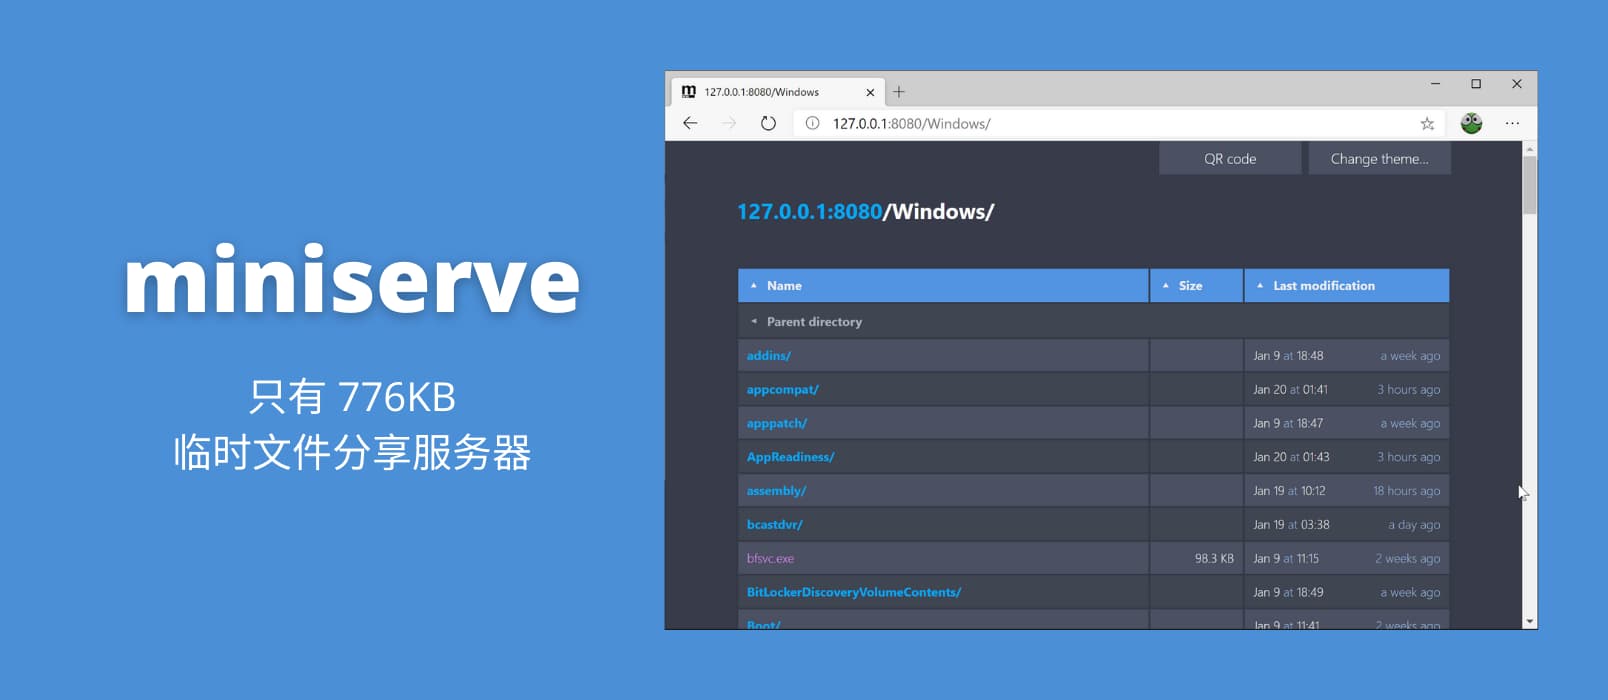 miniserve - 只有 776KB 的临时文件分享服务器[Win/Linux/macOS]